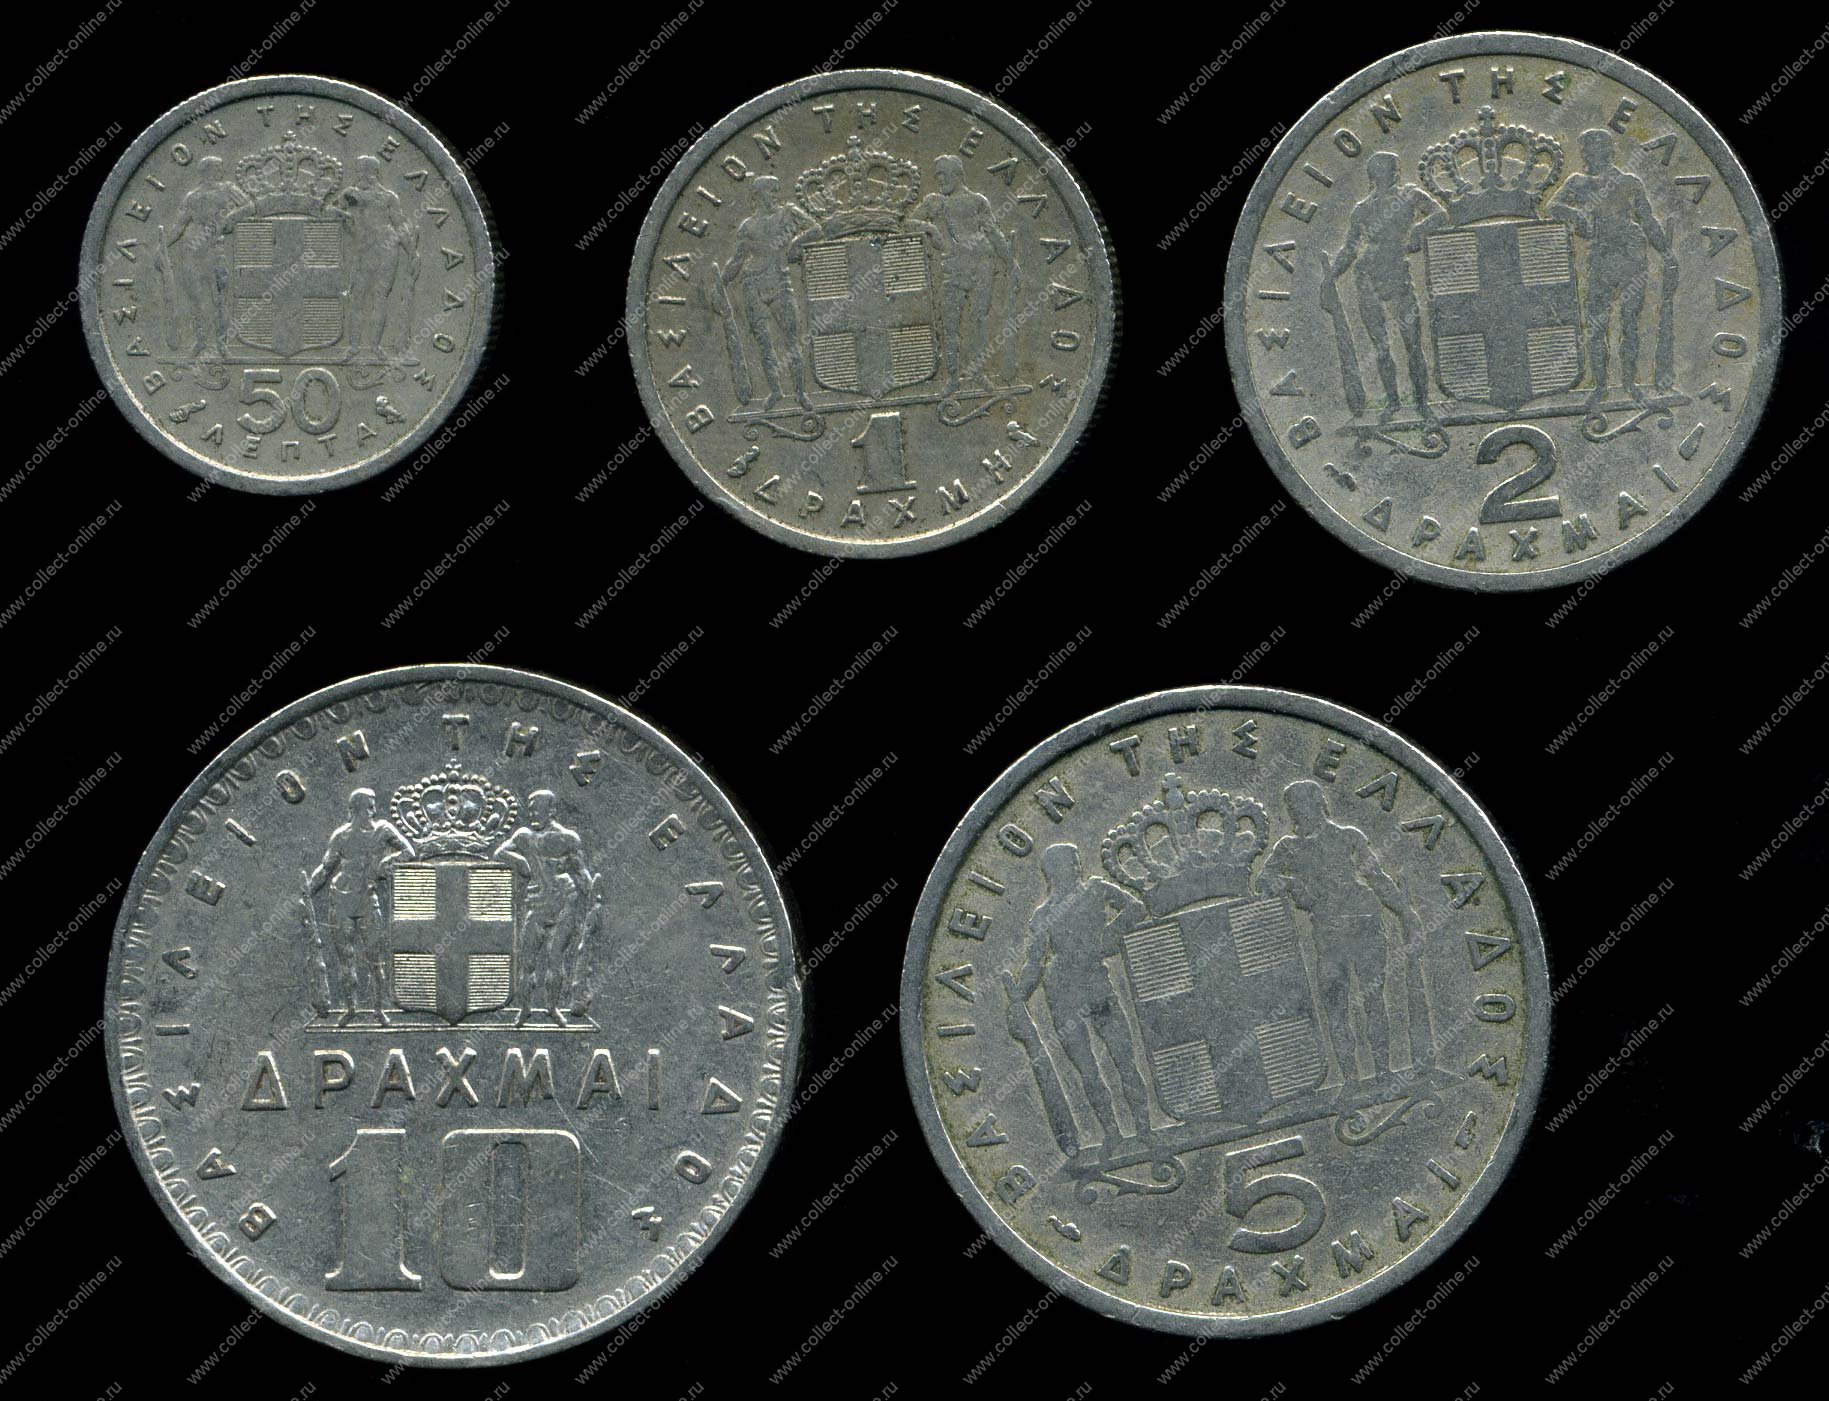 10 Драхм армии. Монеты VF-XF. Как они выглядят. Цена пуги \ККА\-1859-62гг. Коллекционер 8 букв